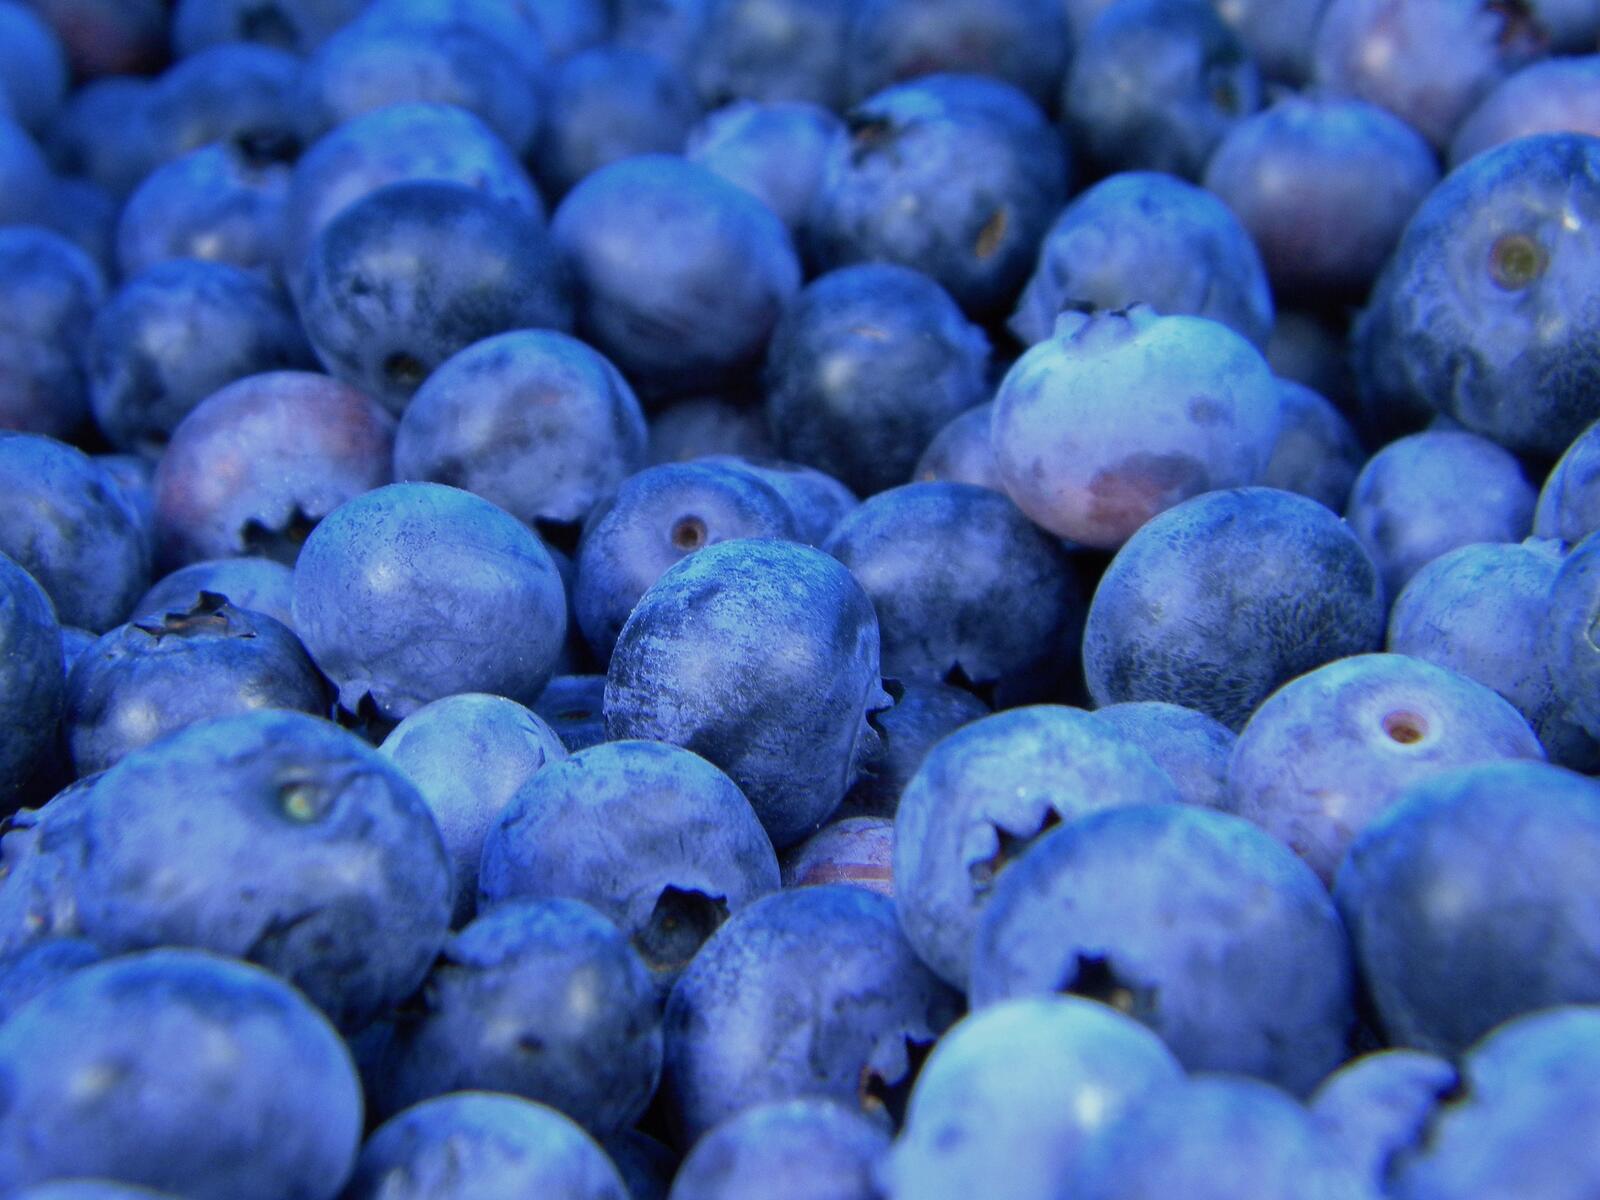 Wallpapers wallpaper blueberries fruits ripe on the desktop